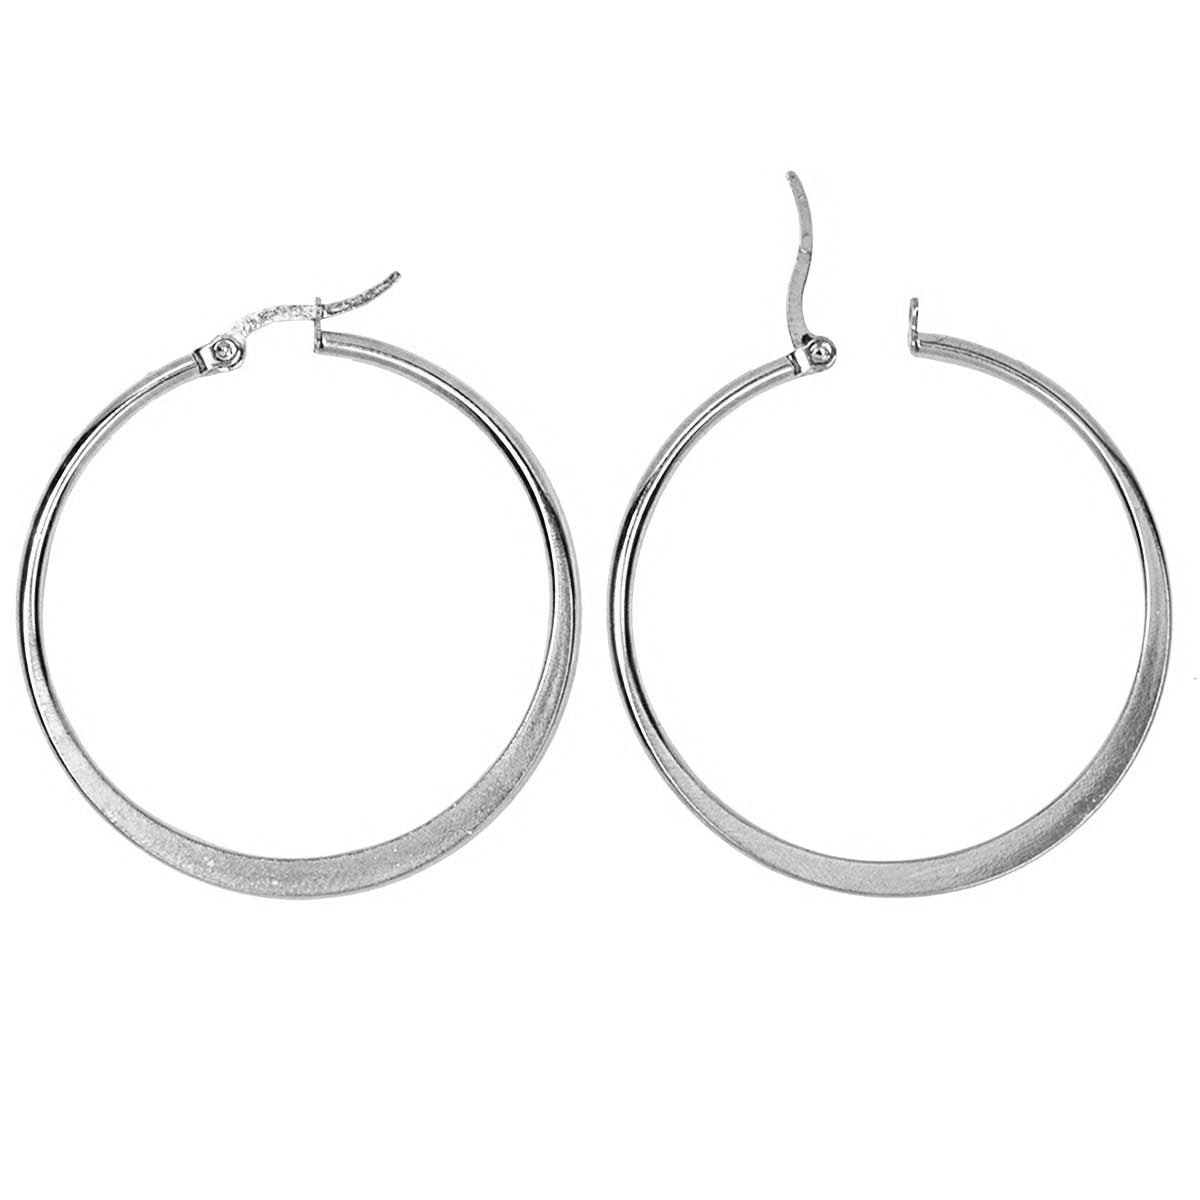 Anisa earrings 3 sizes